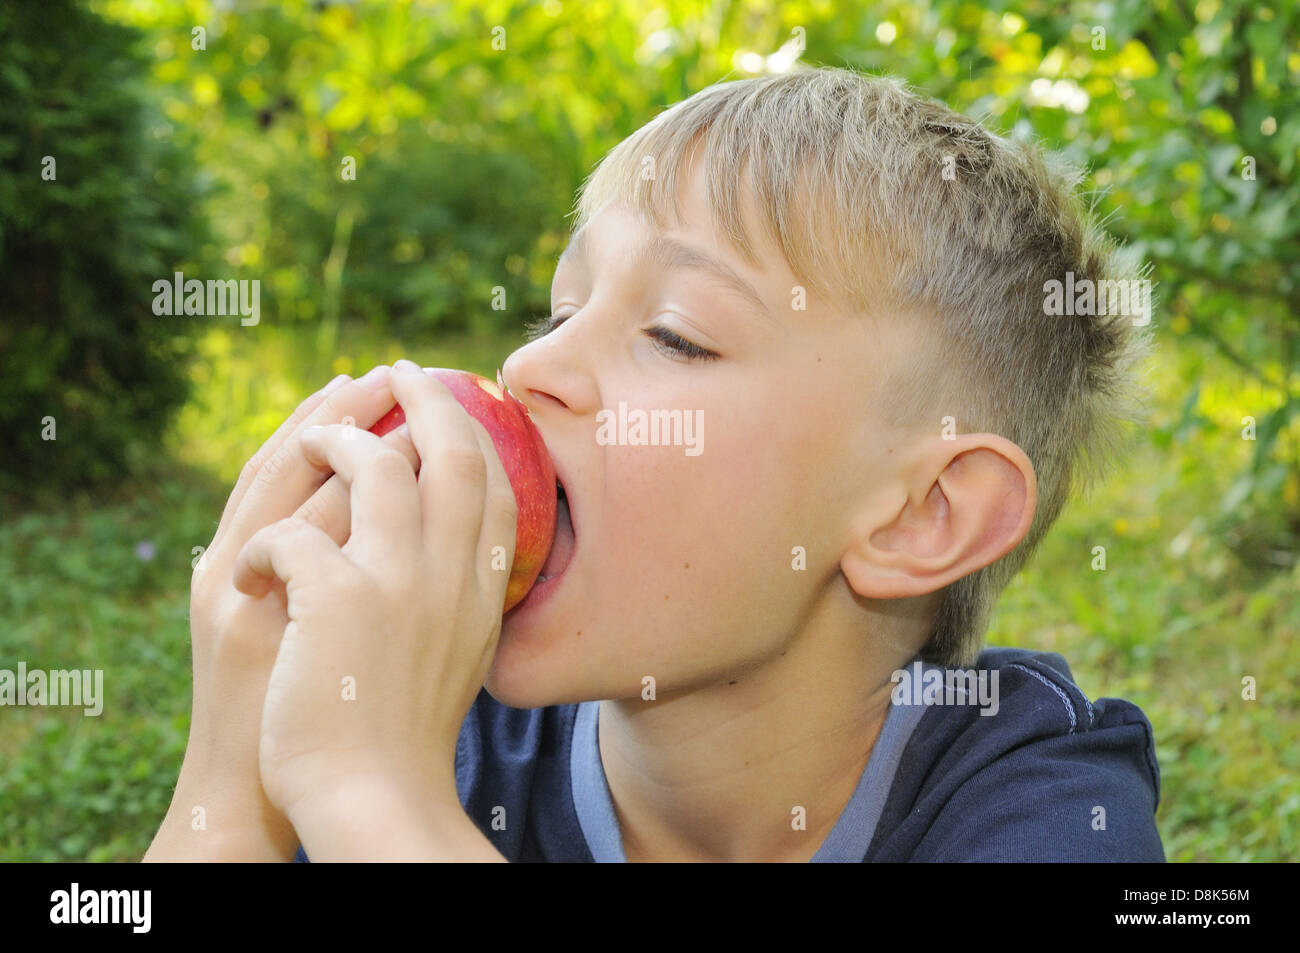 Boy with apple Stock Photo